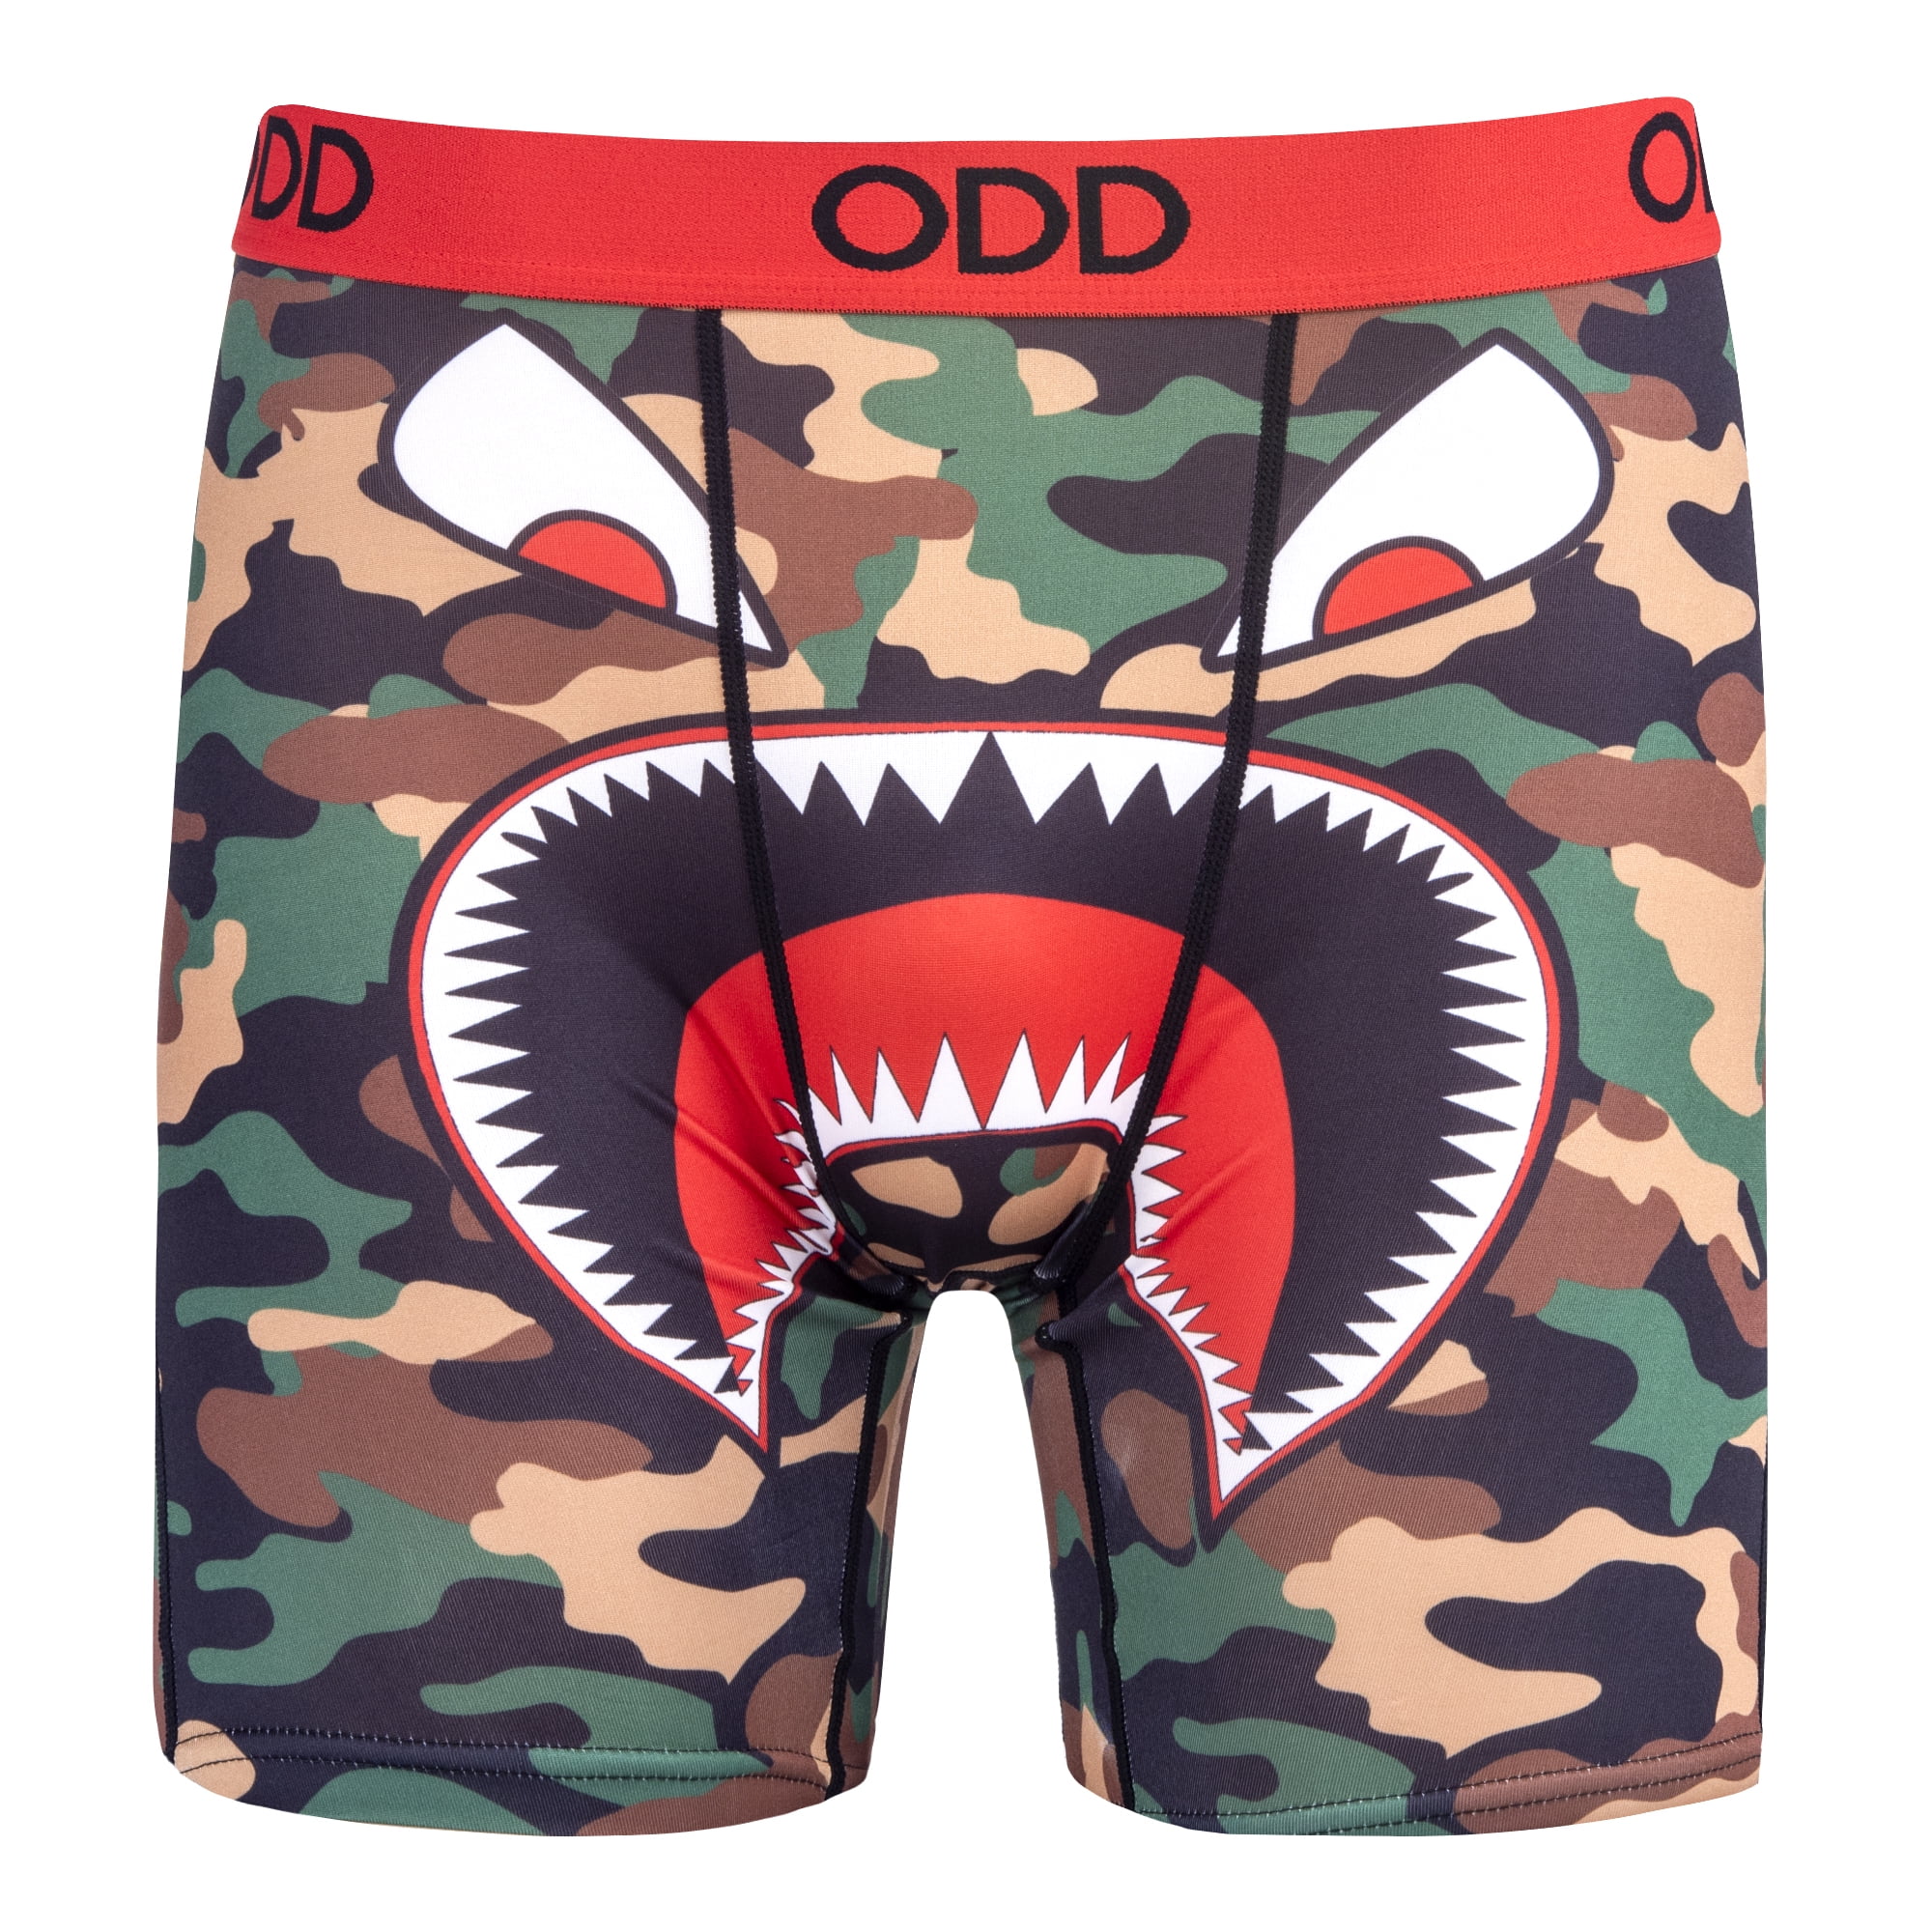 Odd Sox, War Plane, Men's Boxer Briefs, Funny Novelty Underwear, X